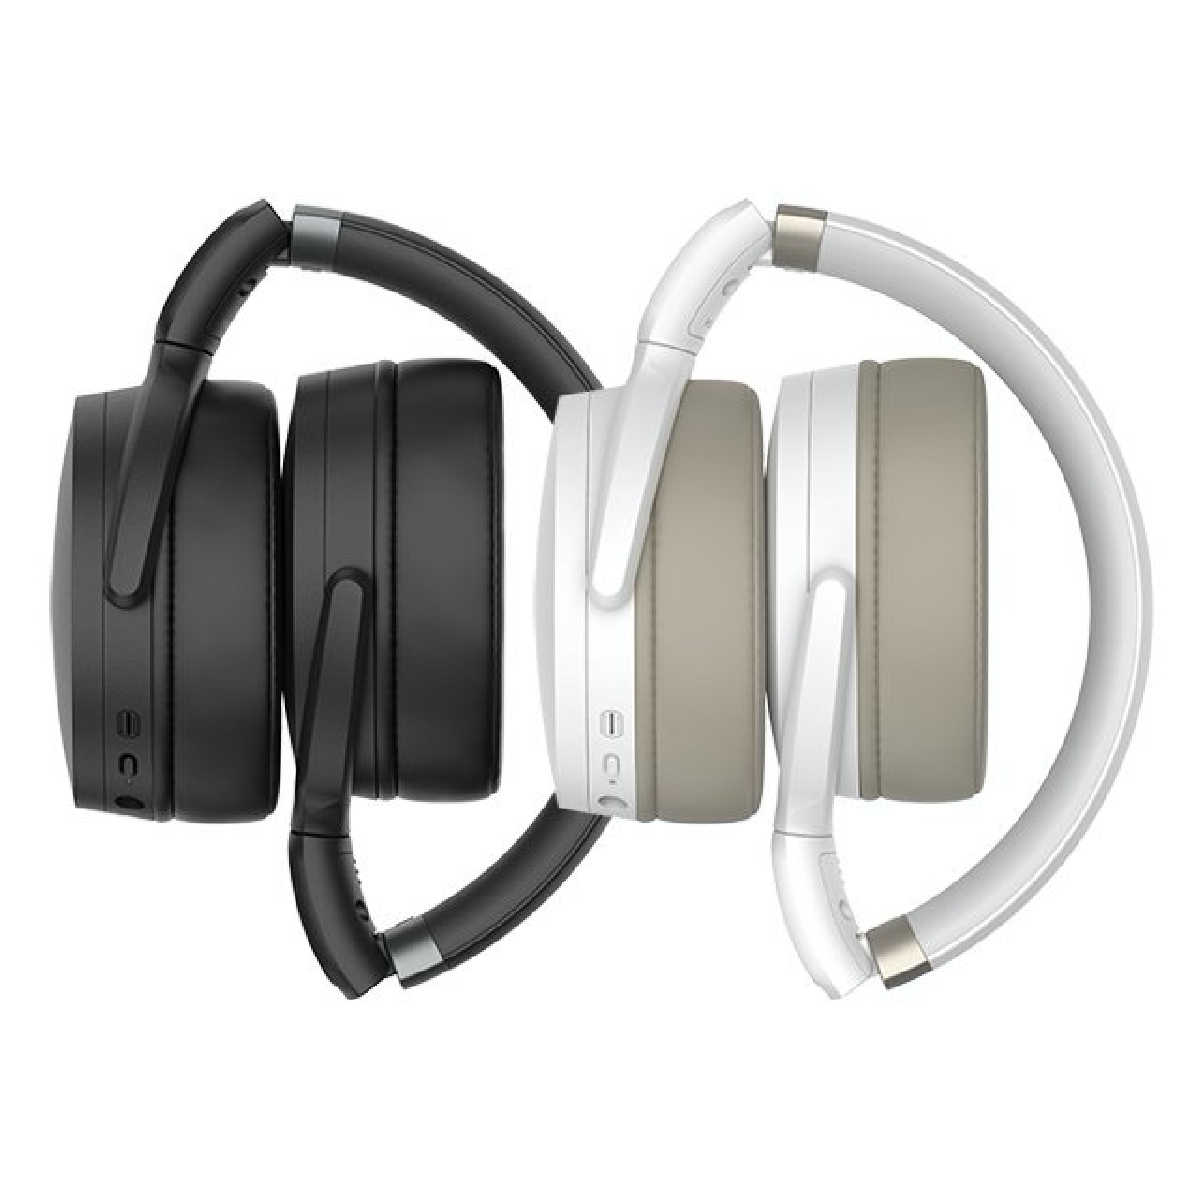 SENNHEISER 森海塞爾 HD450BT 黑 ANC主動降噪 無線耳罩式耳機 | My Ear耳機專門店